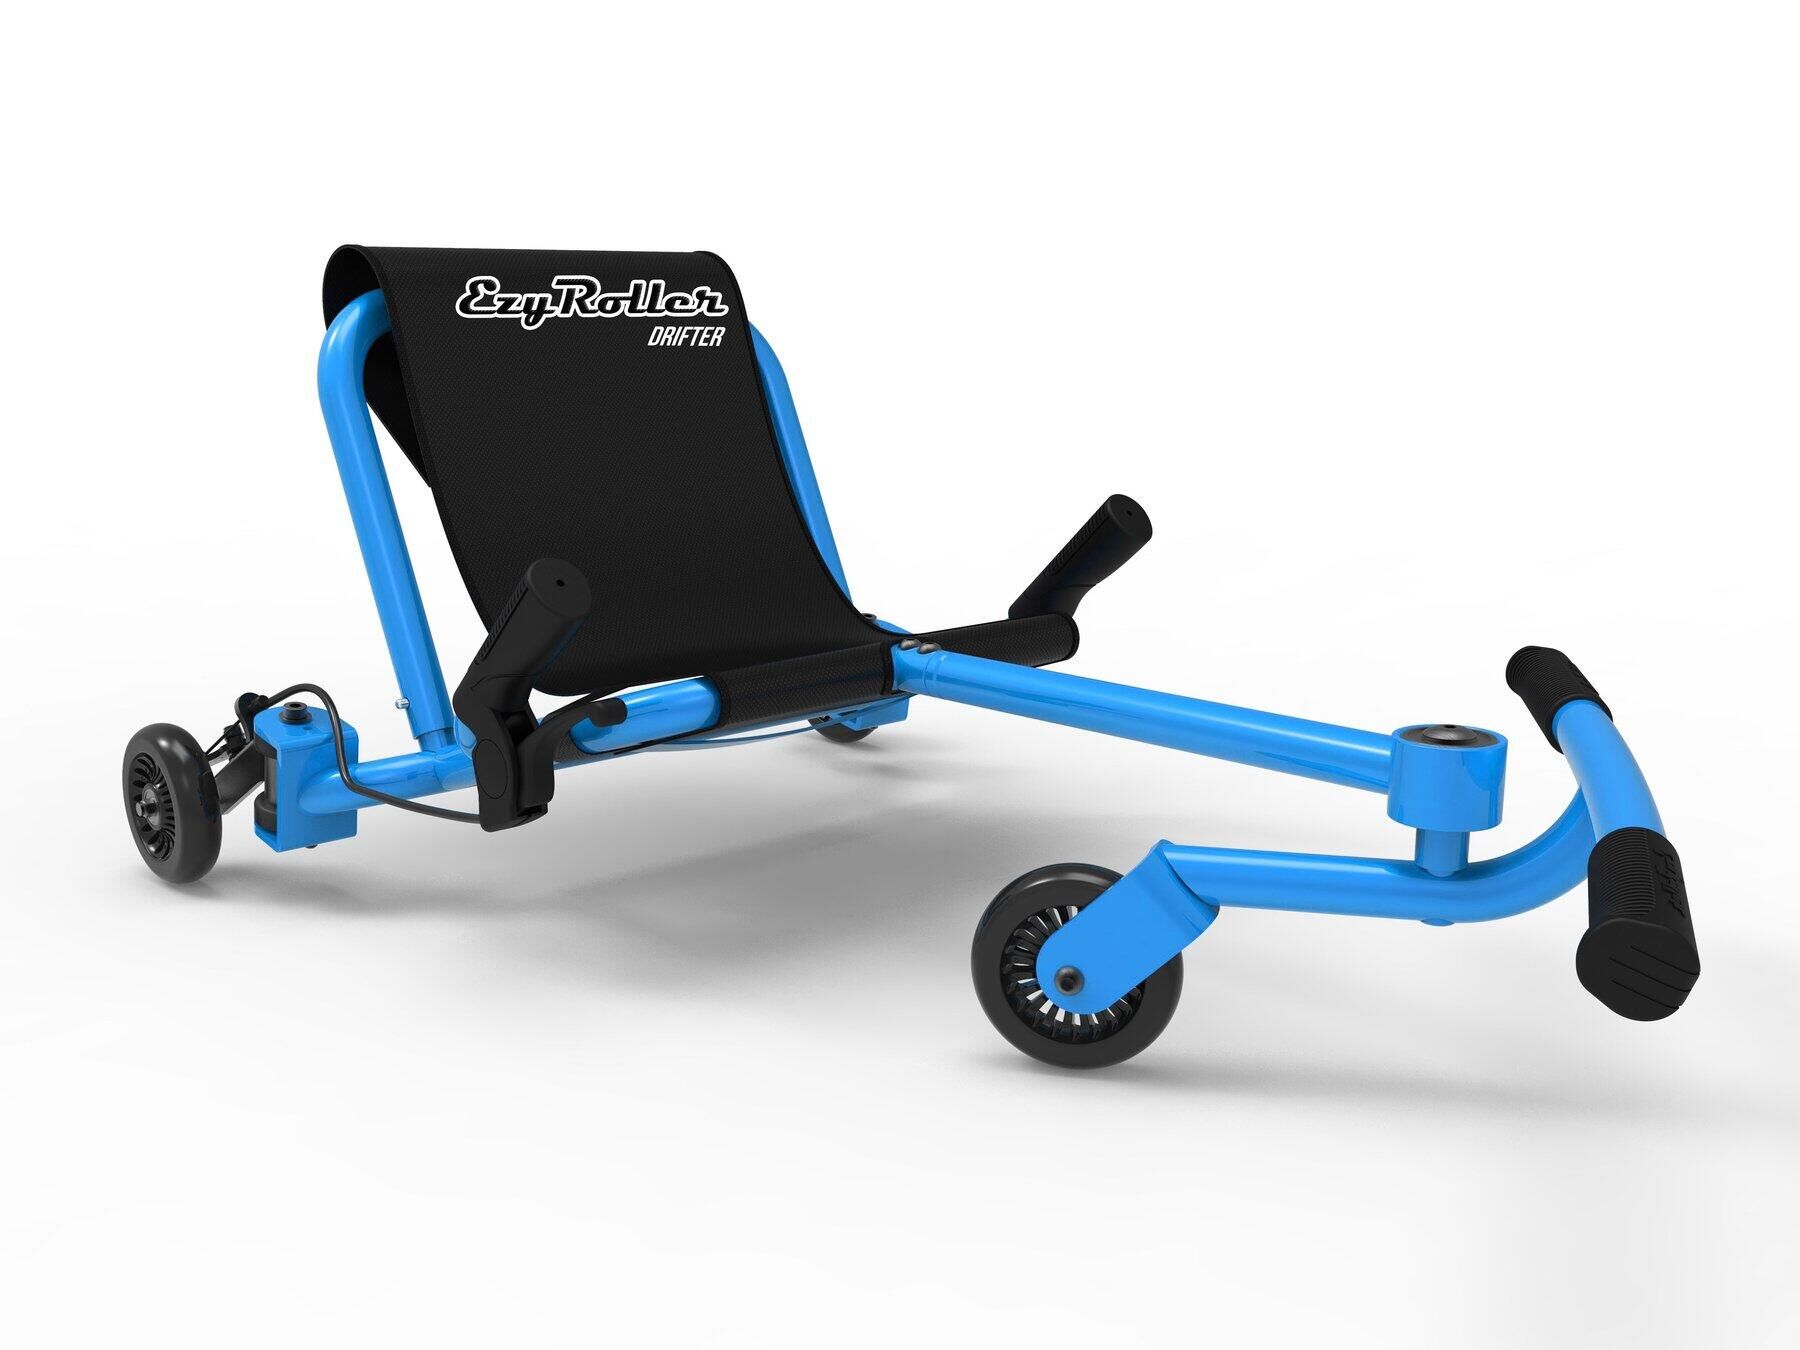 EZYROLLER Ezy Roller DRIFTER Kart Trike Weave Ride On - Blue